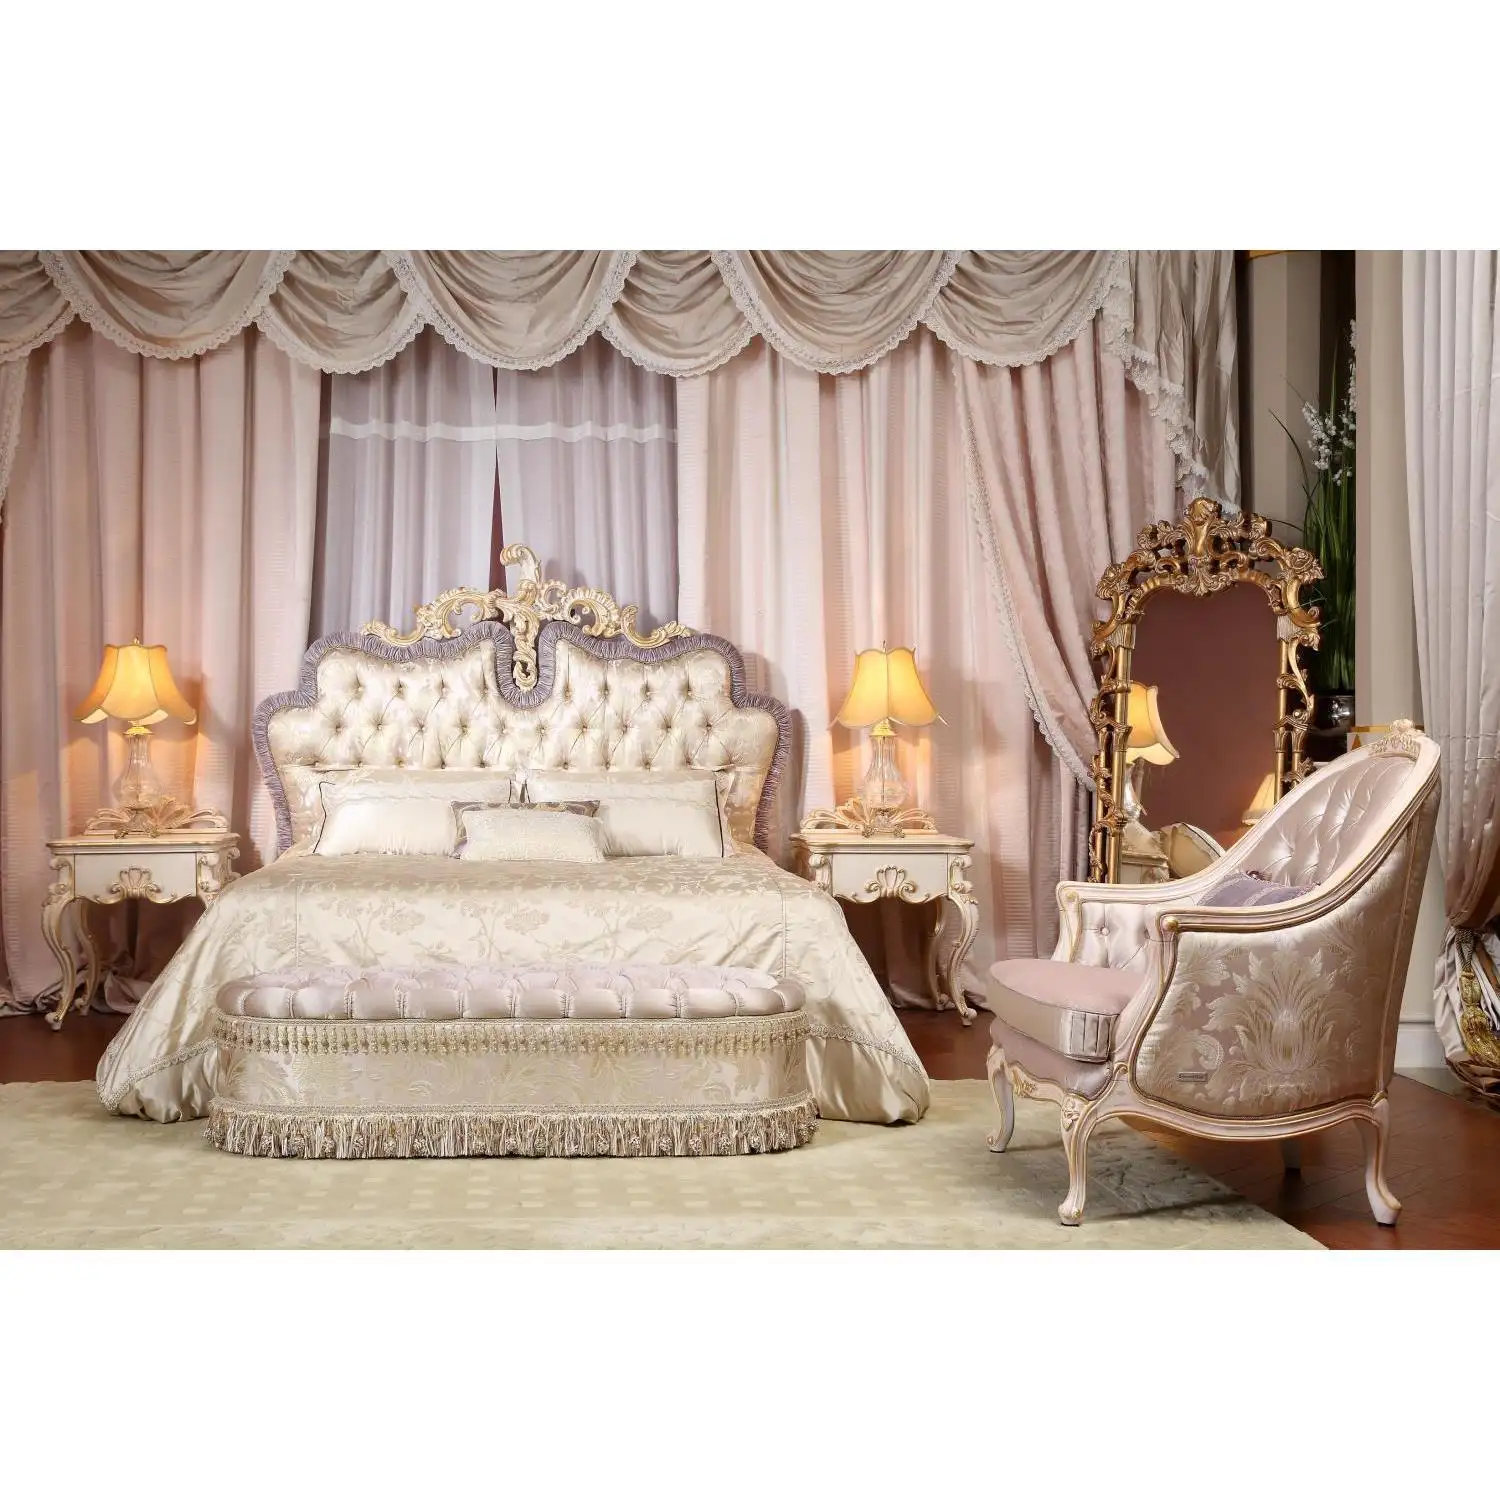 Đồ Nội Thất Phòng Ngủ Cổ Điển Mới Sang Trọng Golden Master Room King Size Queen Size Bed